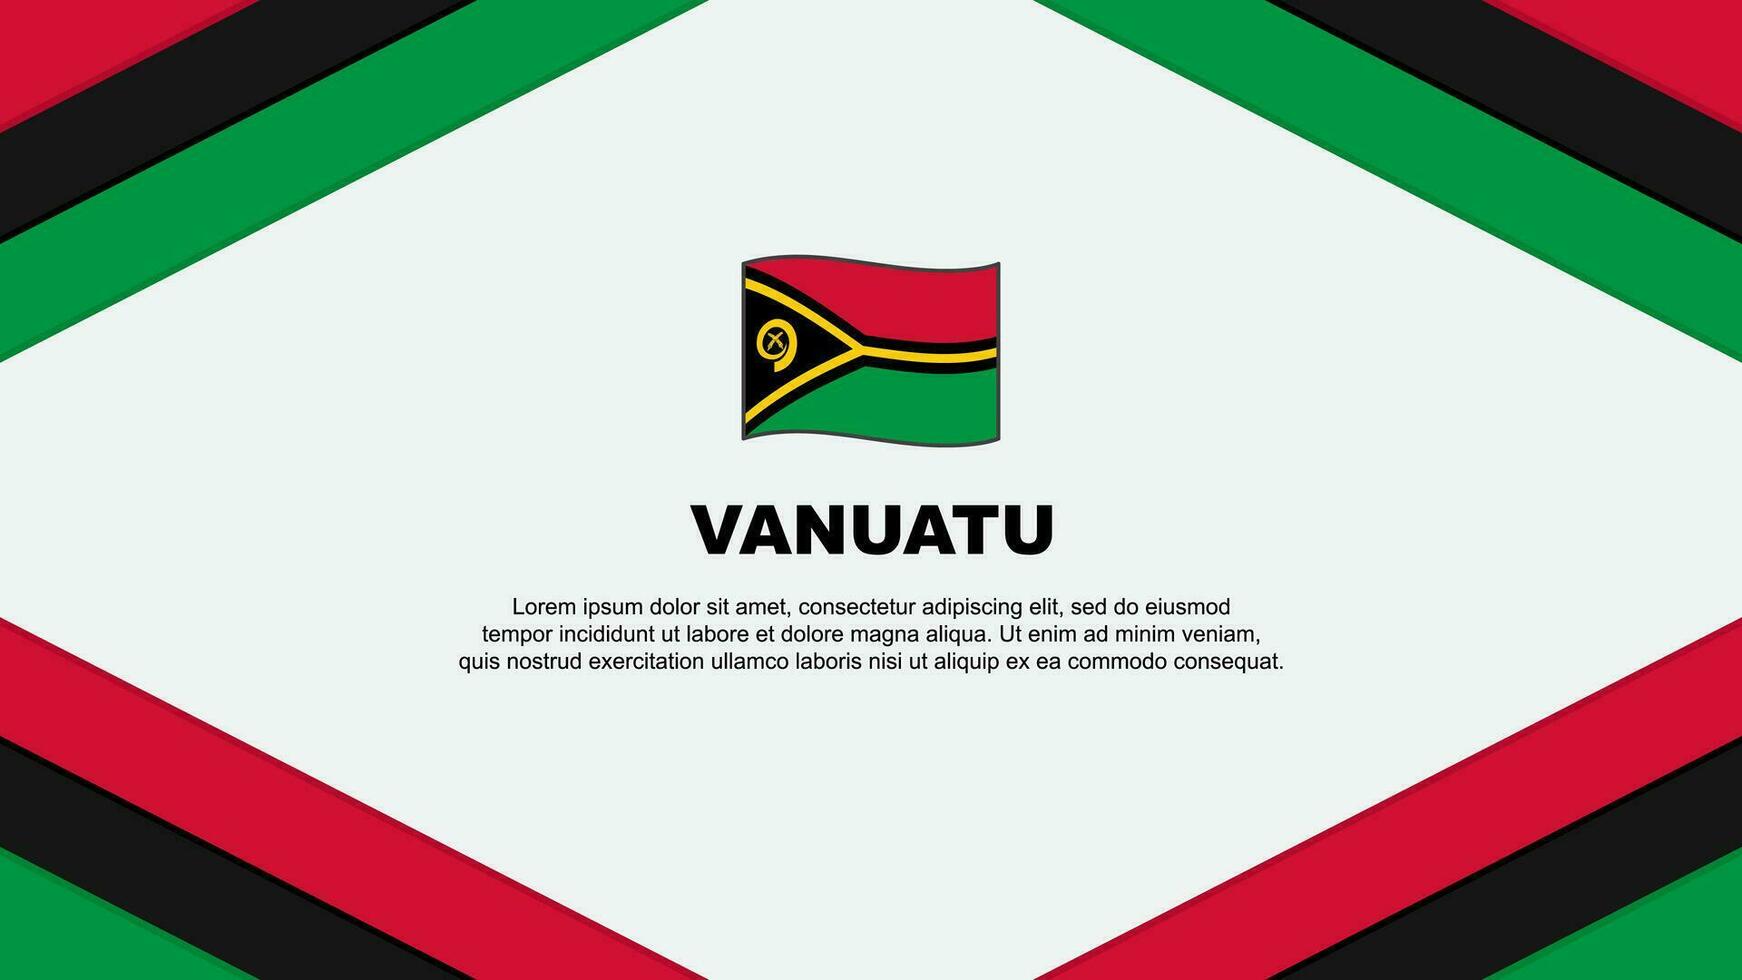 Vanuatu Flag Abstract Background Design Template. Vanuatu Independence Day Banner Cartoon Vector Illustration. Vanuatu Template